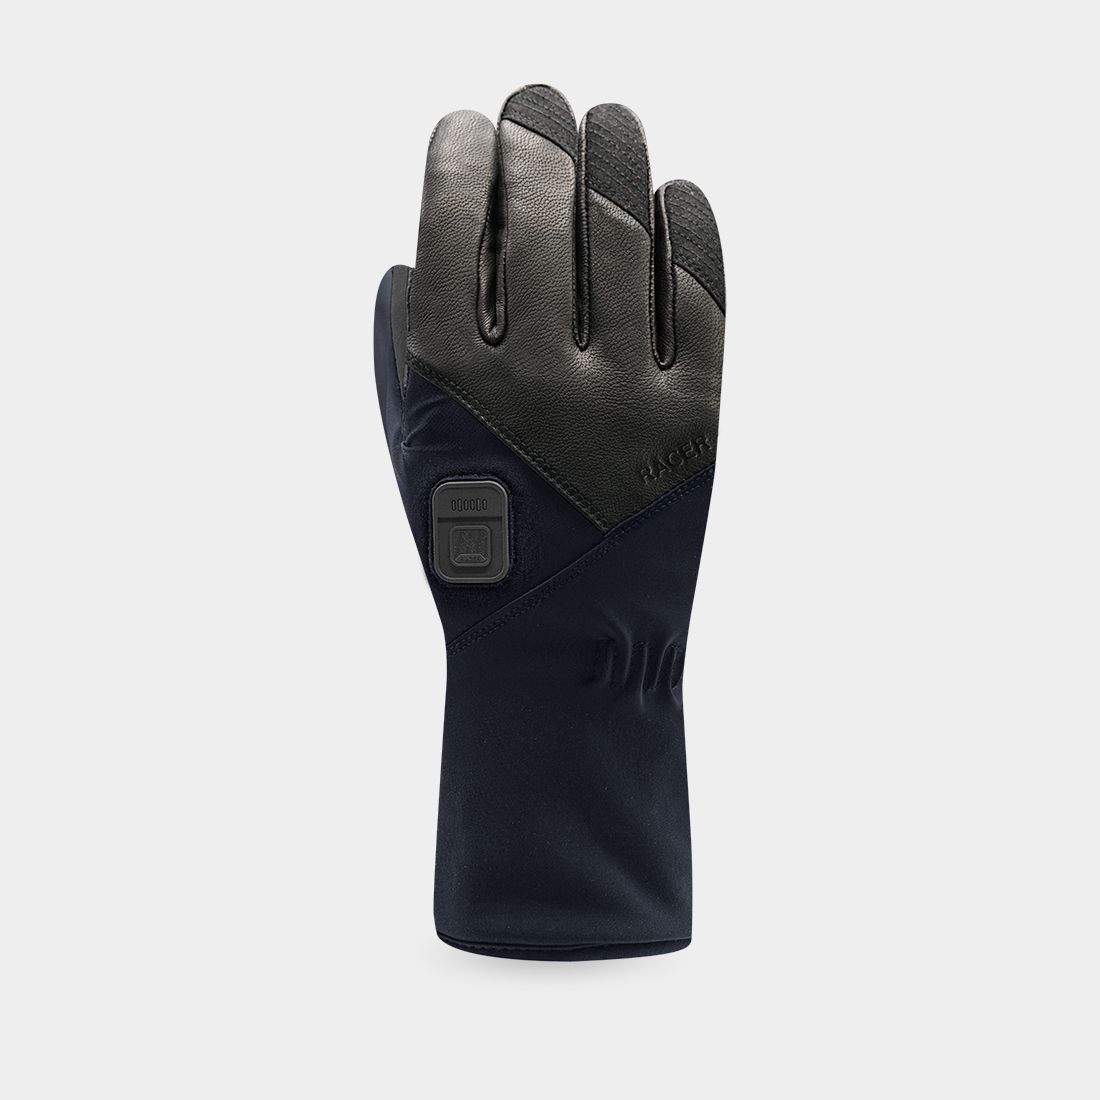 E-GLOVE 4 URBAN - Heated gloves